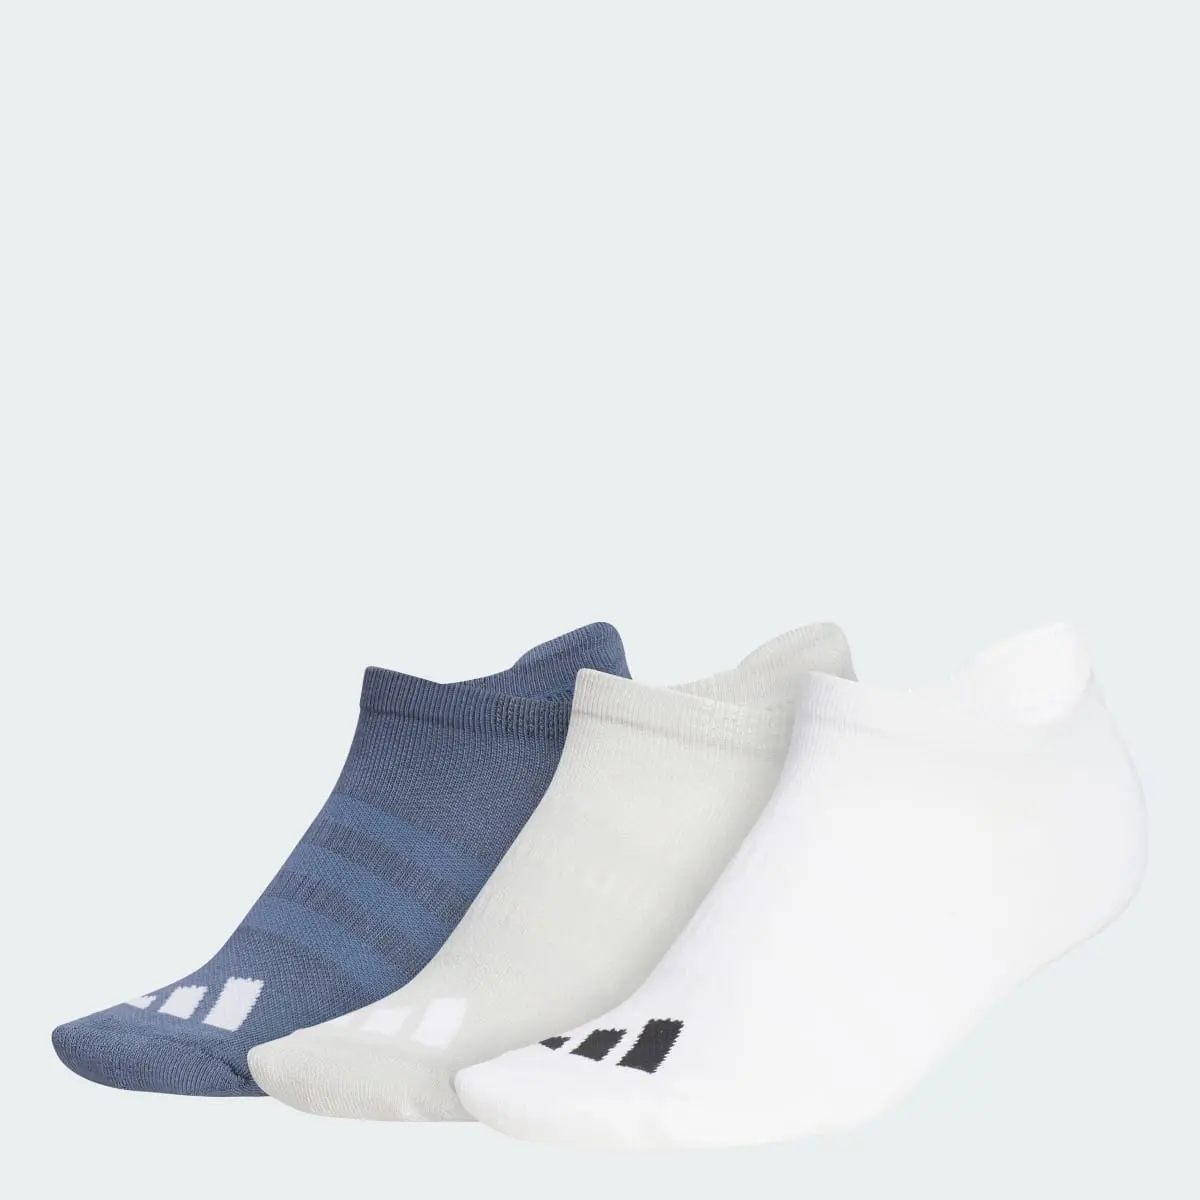 Adidas Chaussettes basses femmes Comfort (3 paires). 1